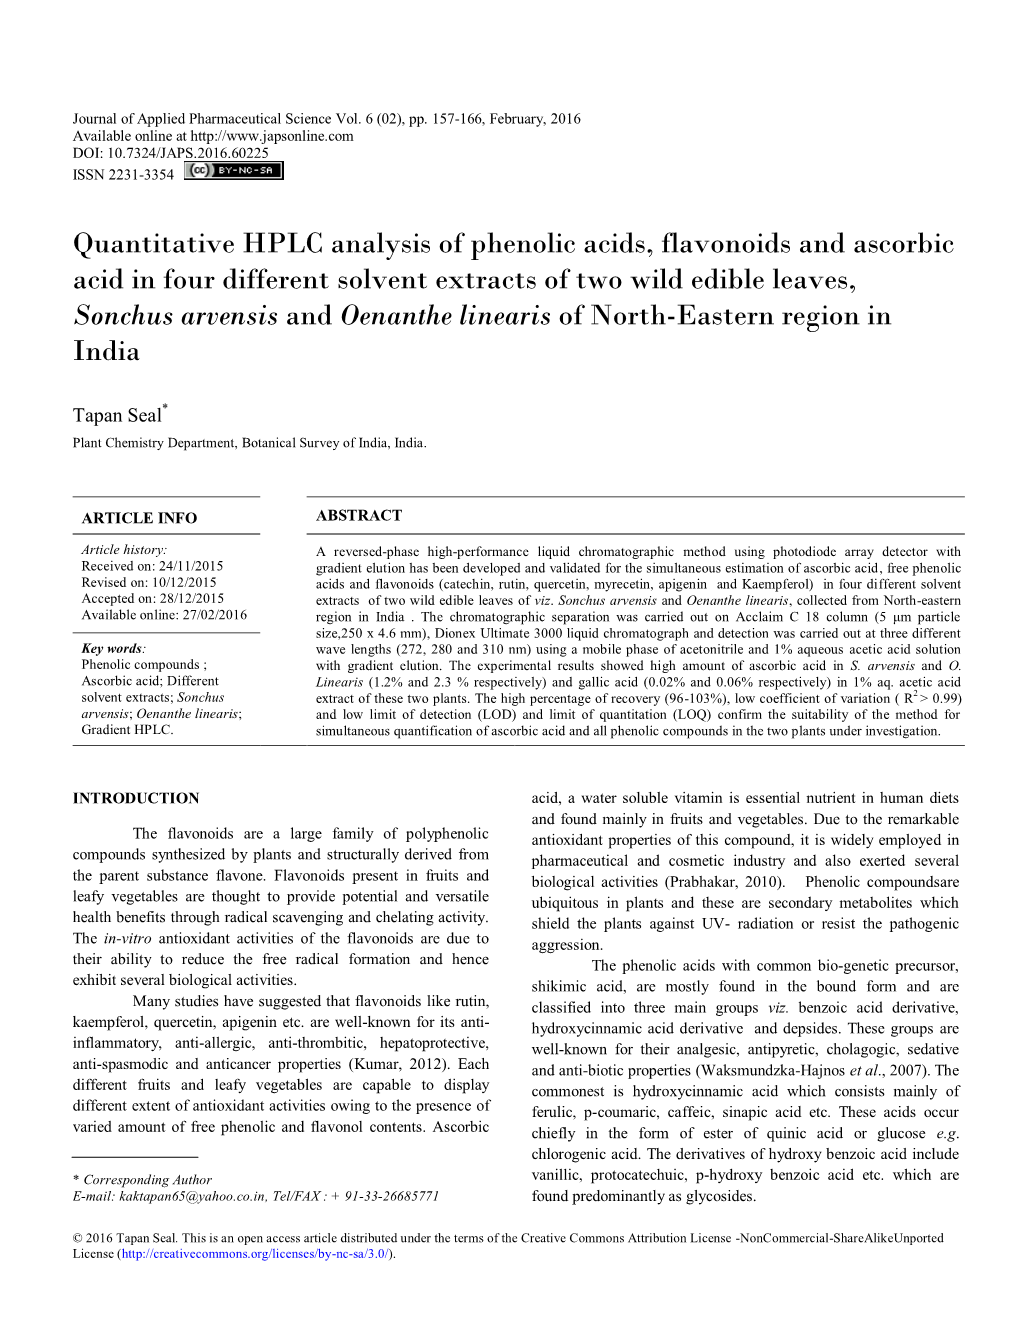 Quantitative HPLC Analysis of Phenolic Acids, Flavonoids And